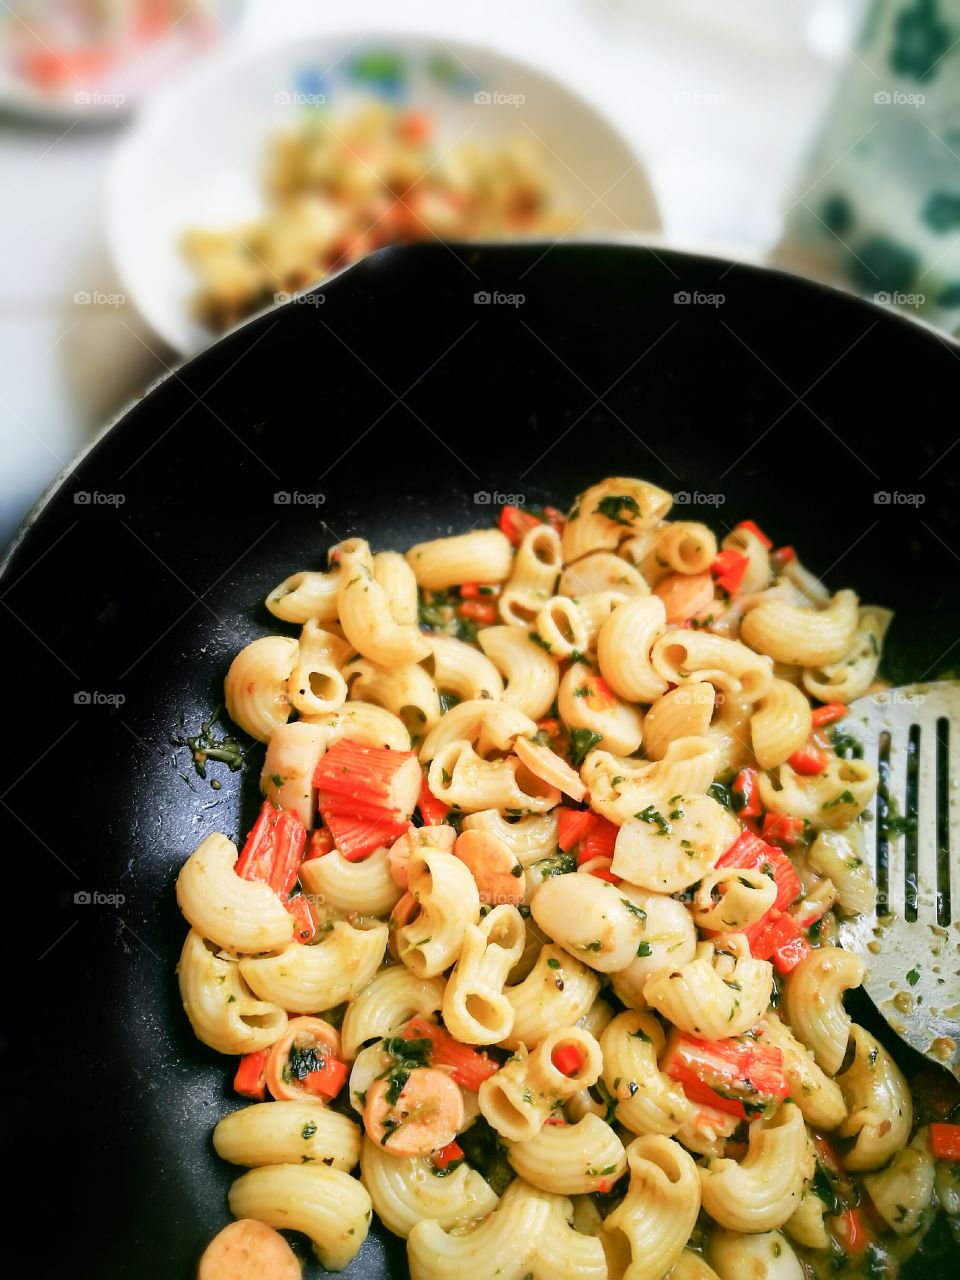 Elevated view of macaroni pasta